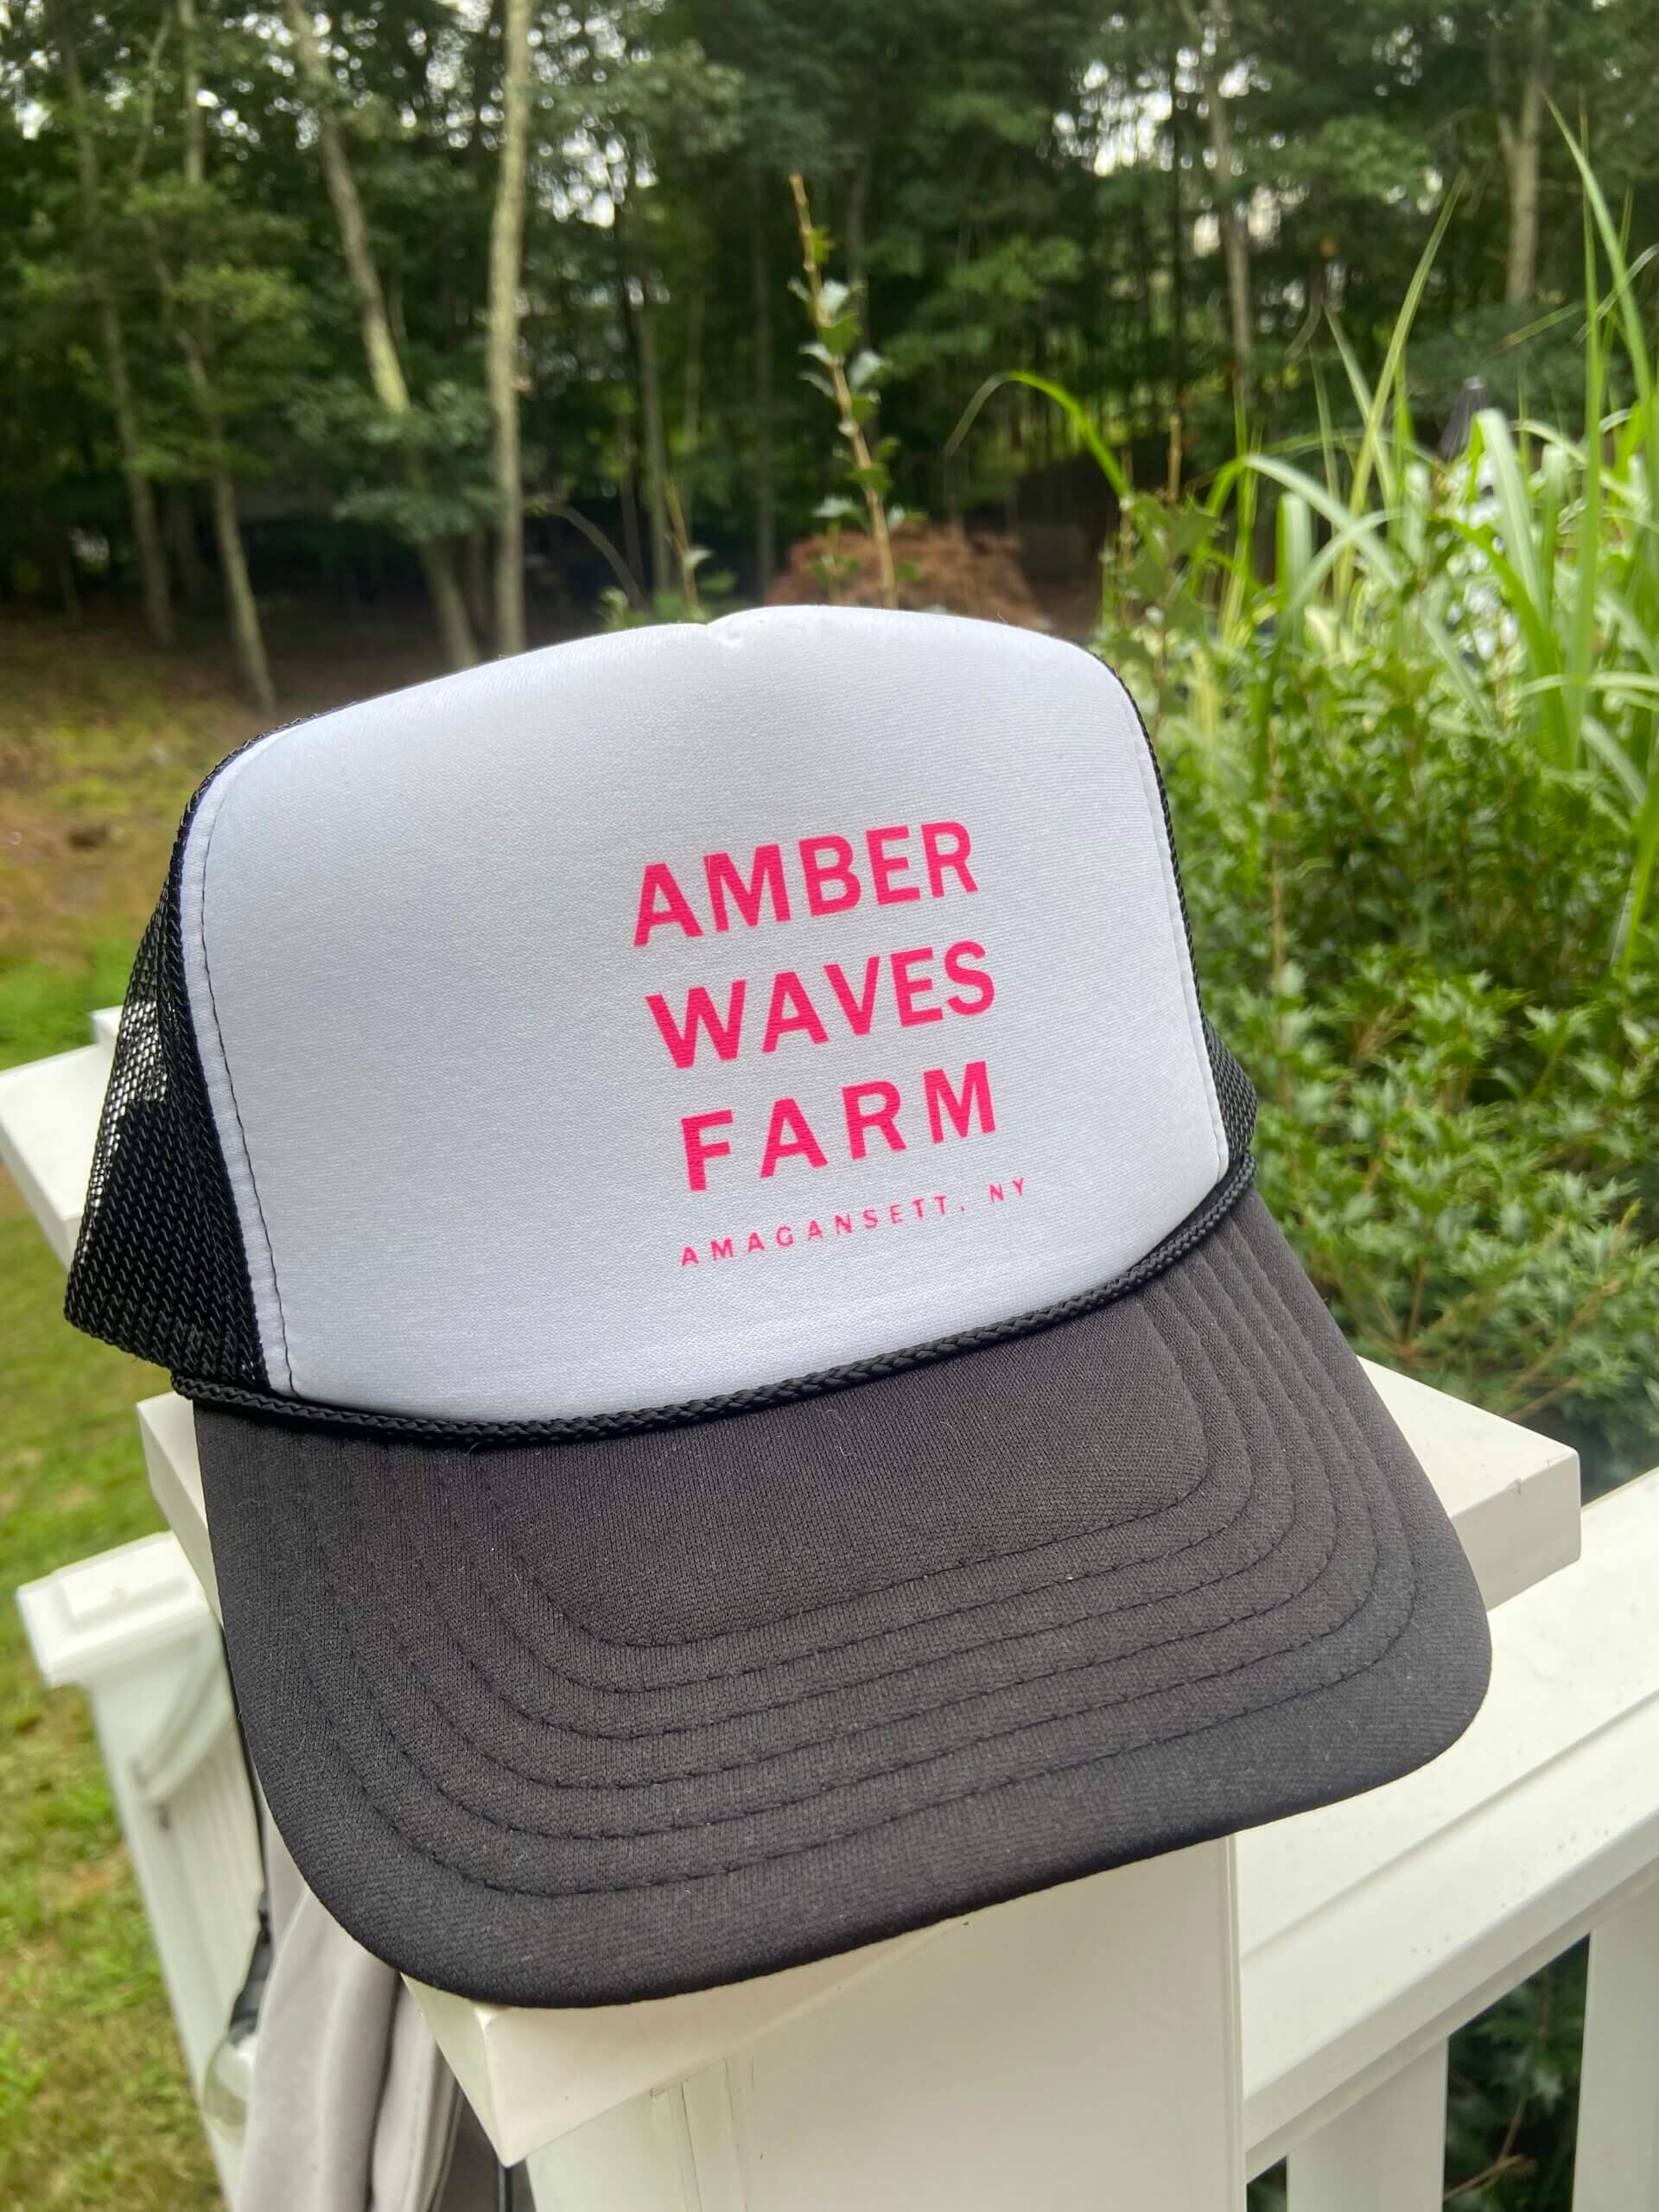 Amber Waves Farm swag hat